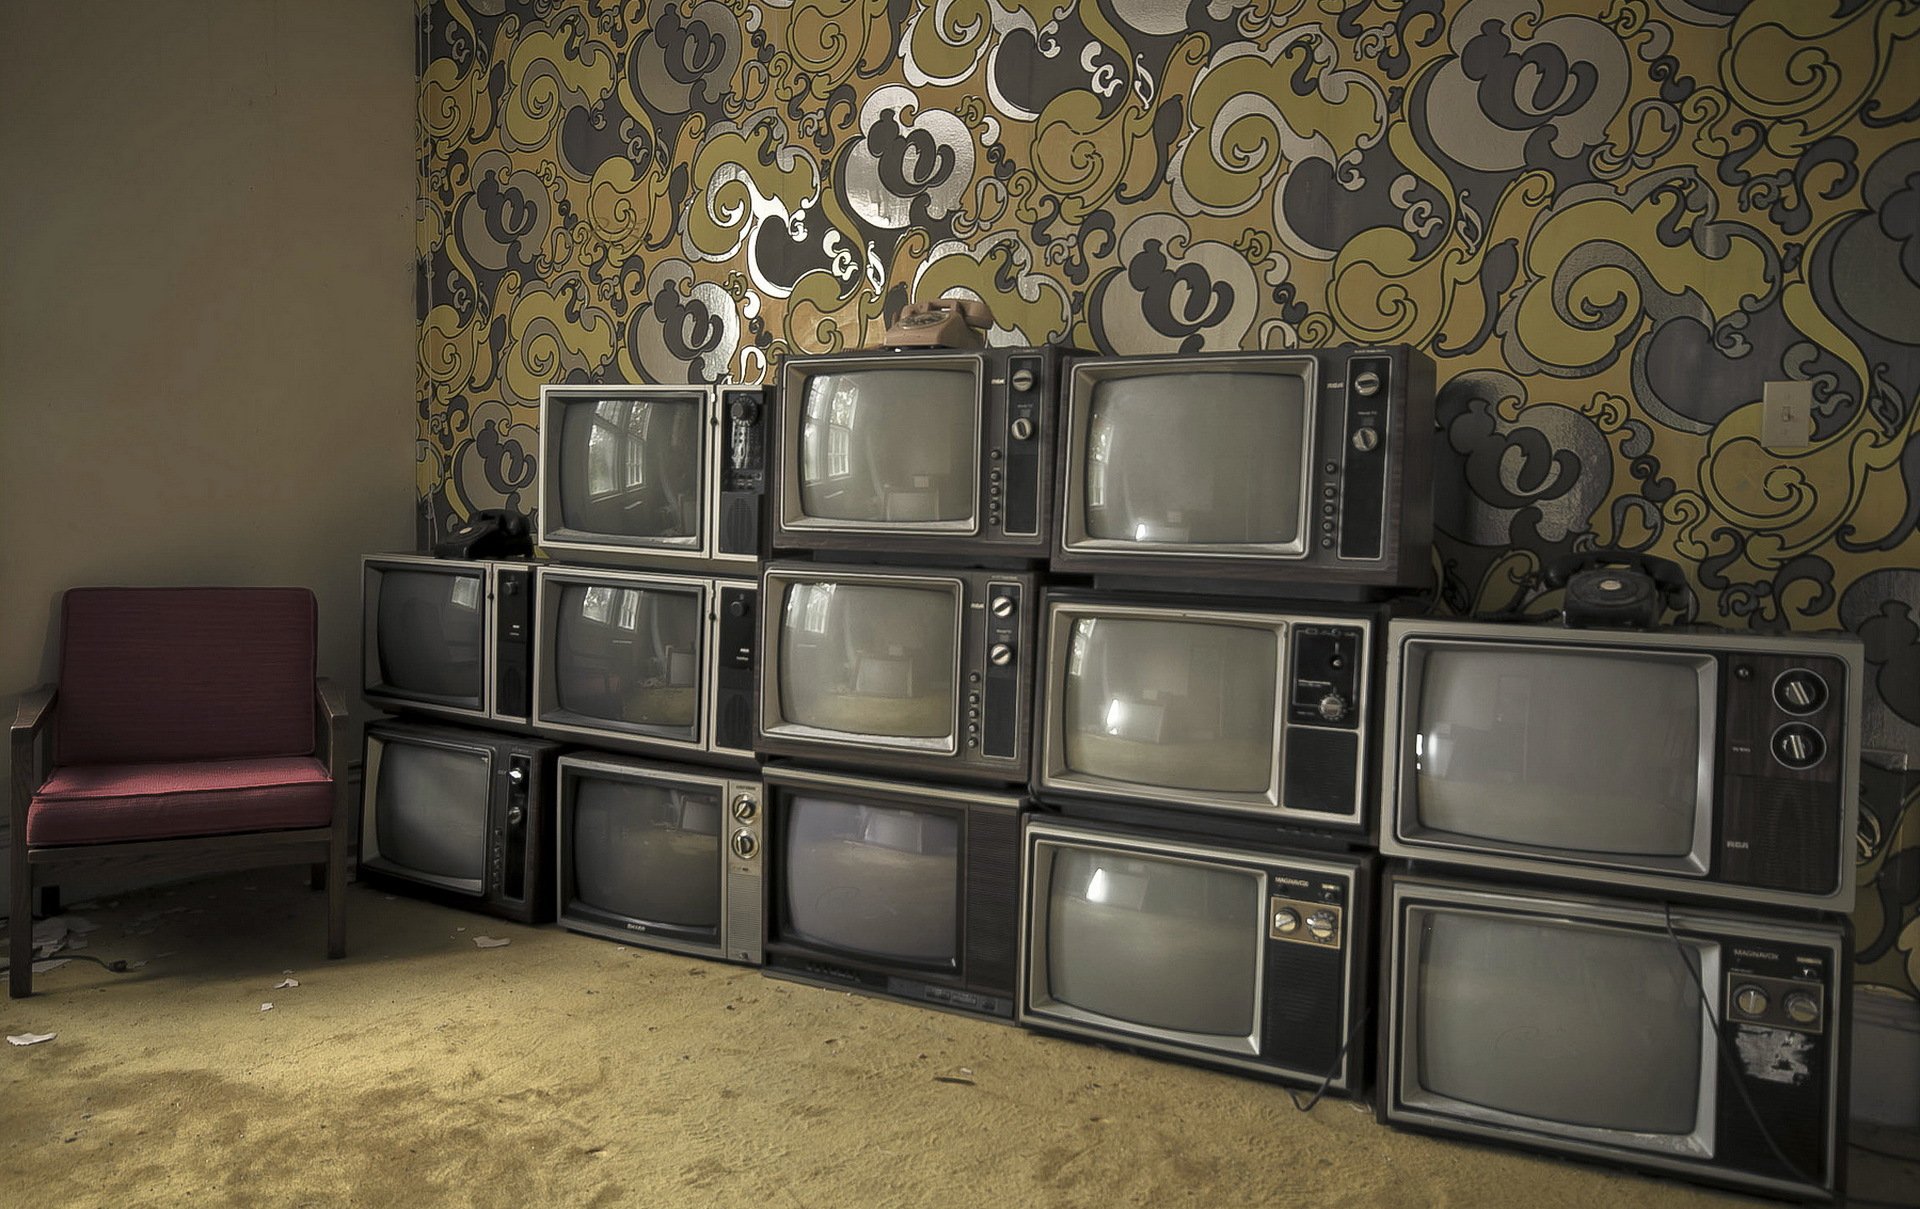 Телевизор готов. Много телевизоров. Старый телевизор. Много старых телевизоров. Стена из старых телевизоров.